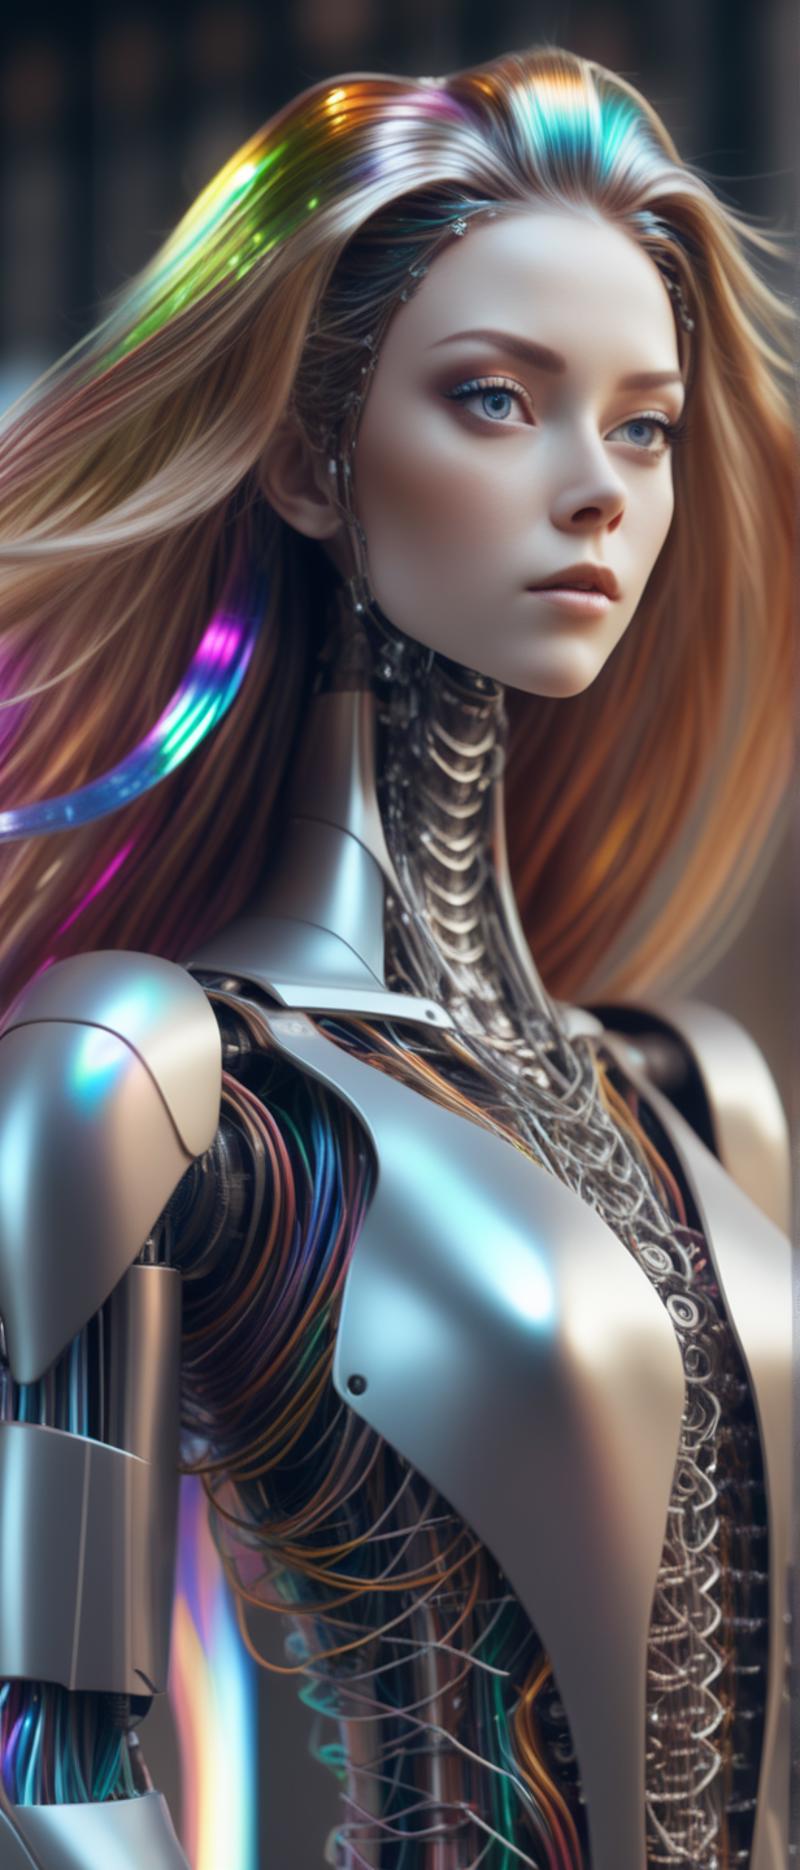 AI model image by BrokenSpirit